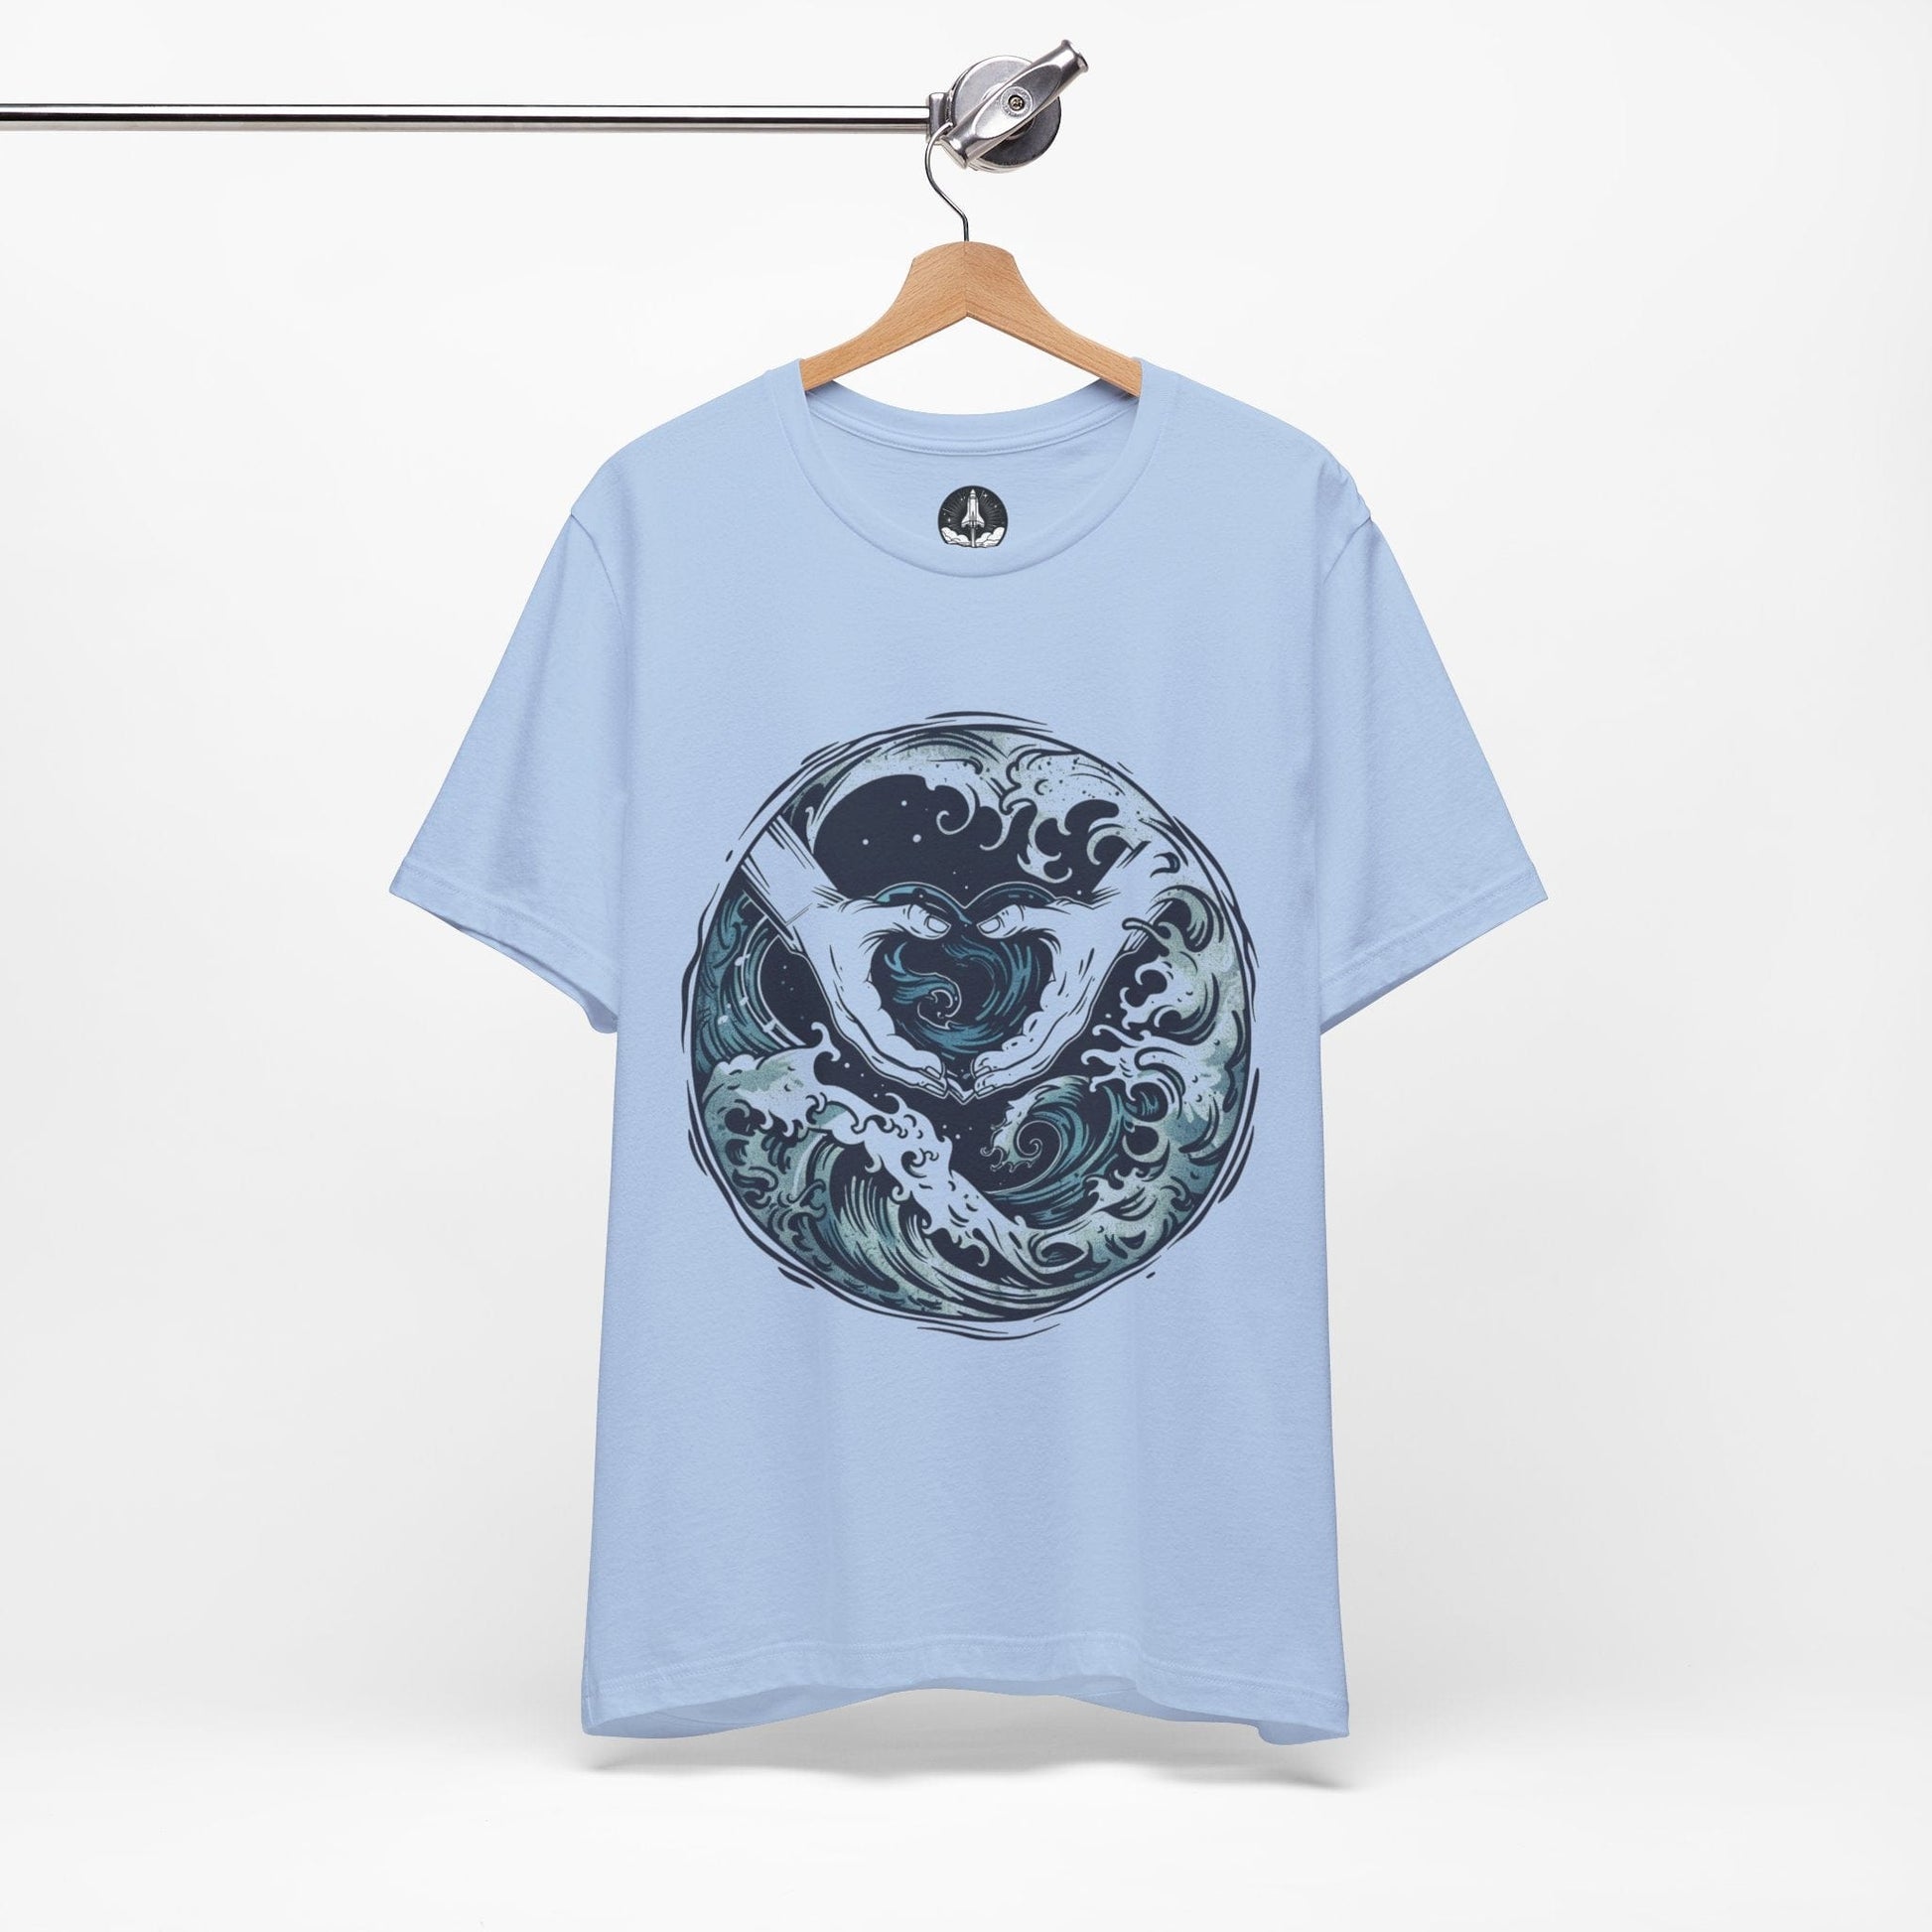 T-Shirt Aquarian Currents TShirts: Embrace the Flow